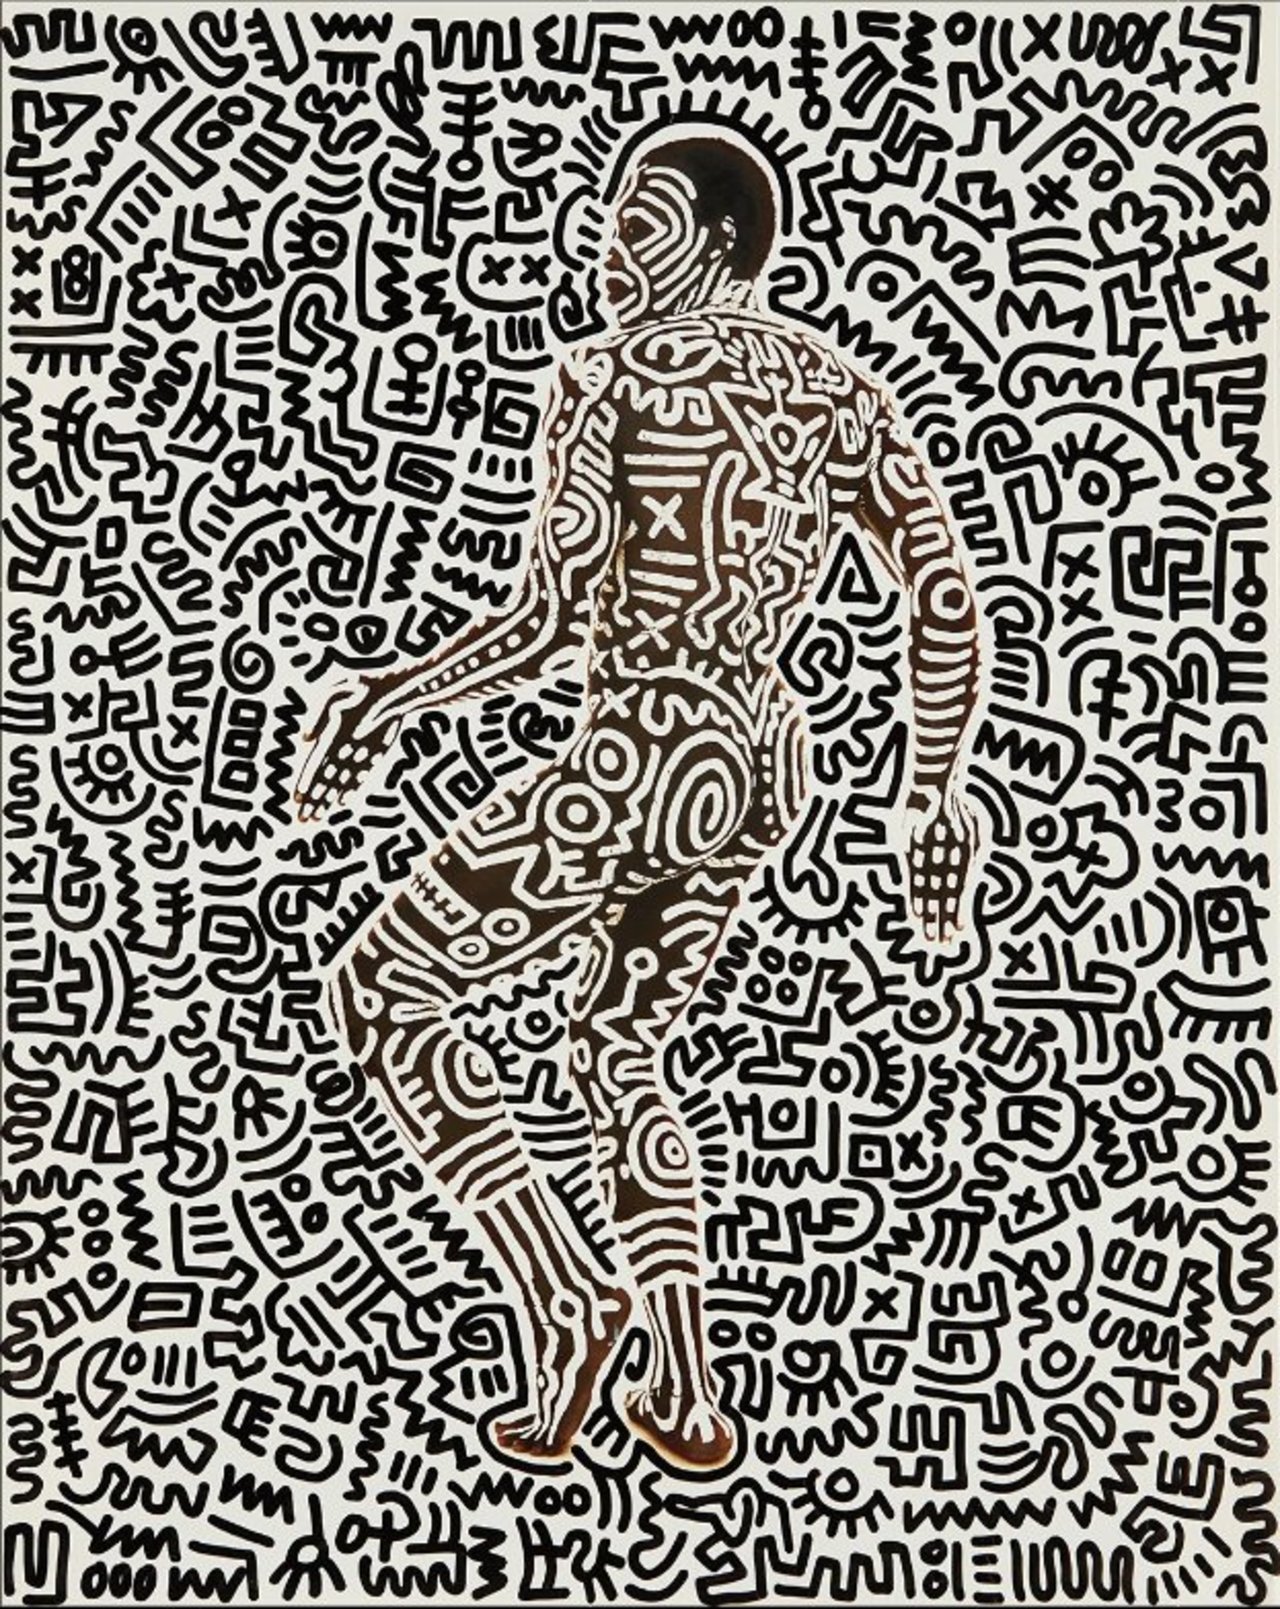 RT @Mr_Mustard: Keith Haring - 'Untitled (Bill T. Jones)' 1984 https://t.co/n3C8FQePZC rt @MenschOhneMusil @BertassoClaudio